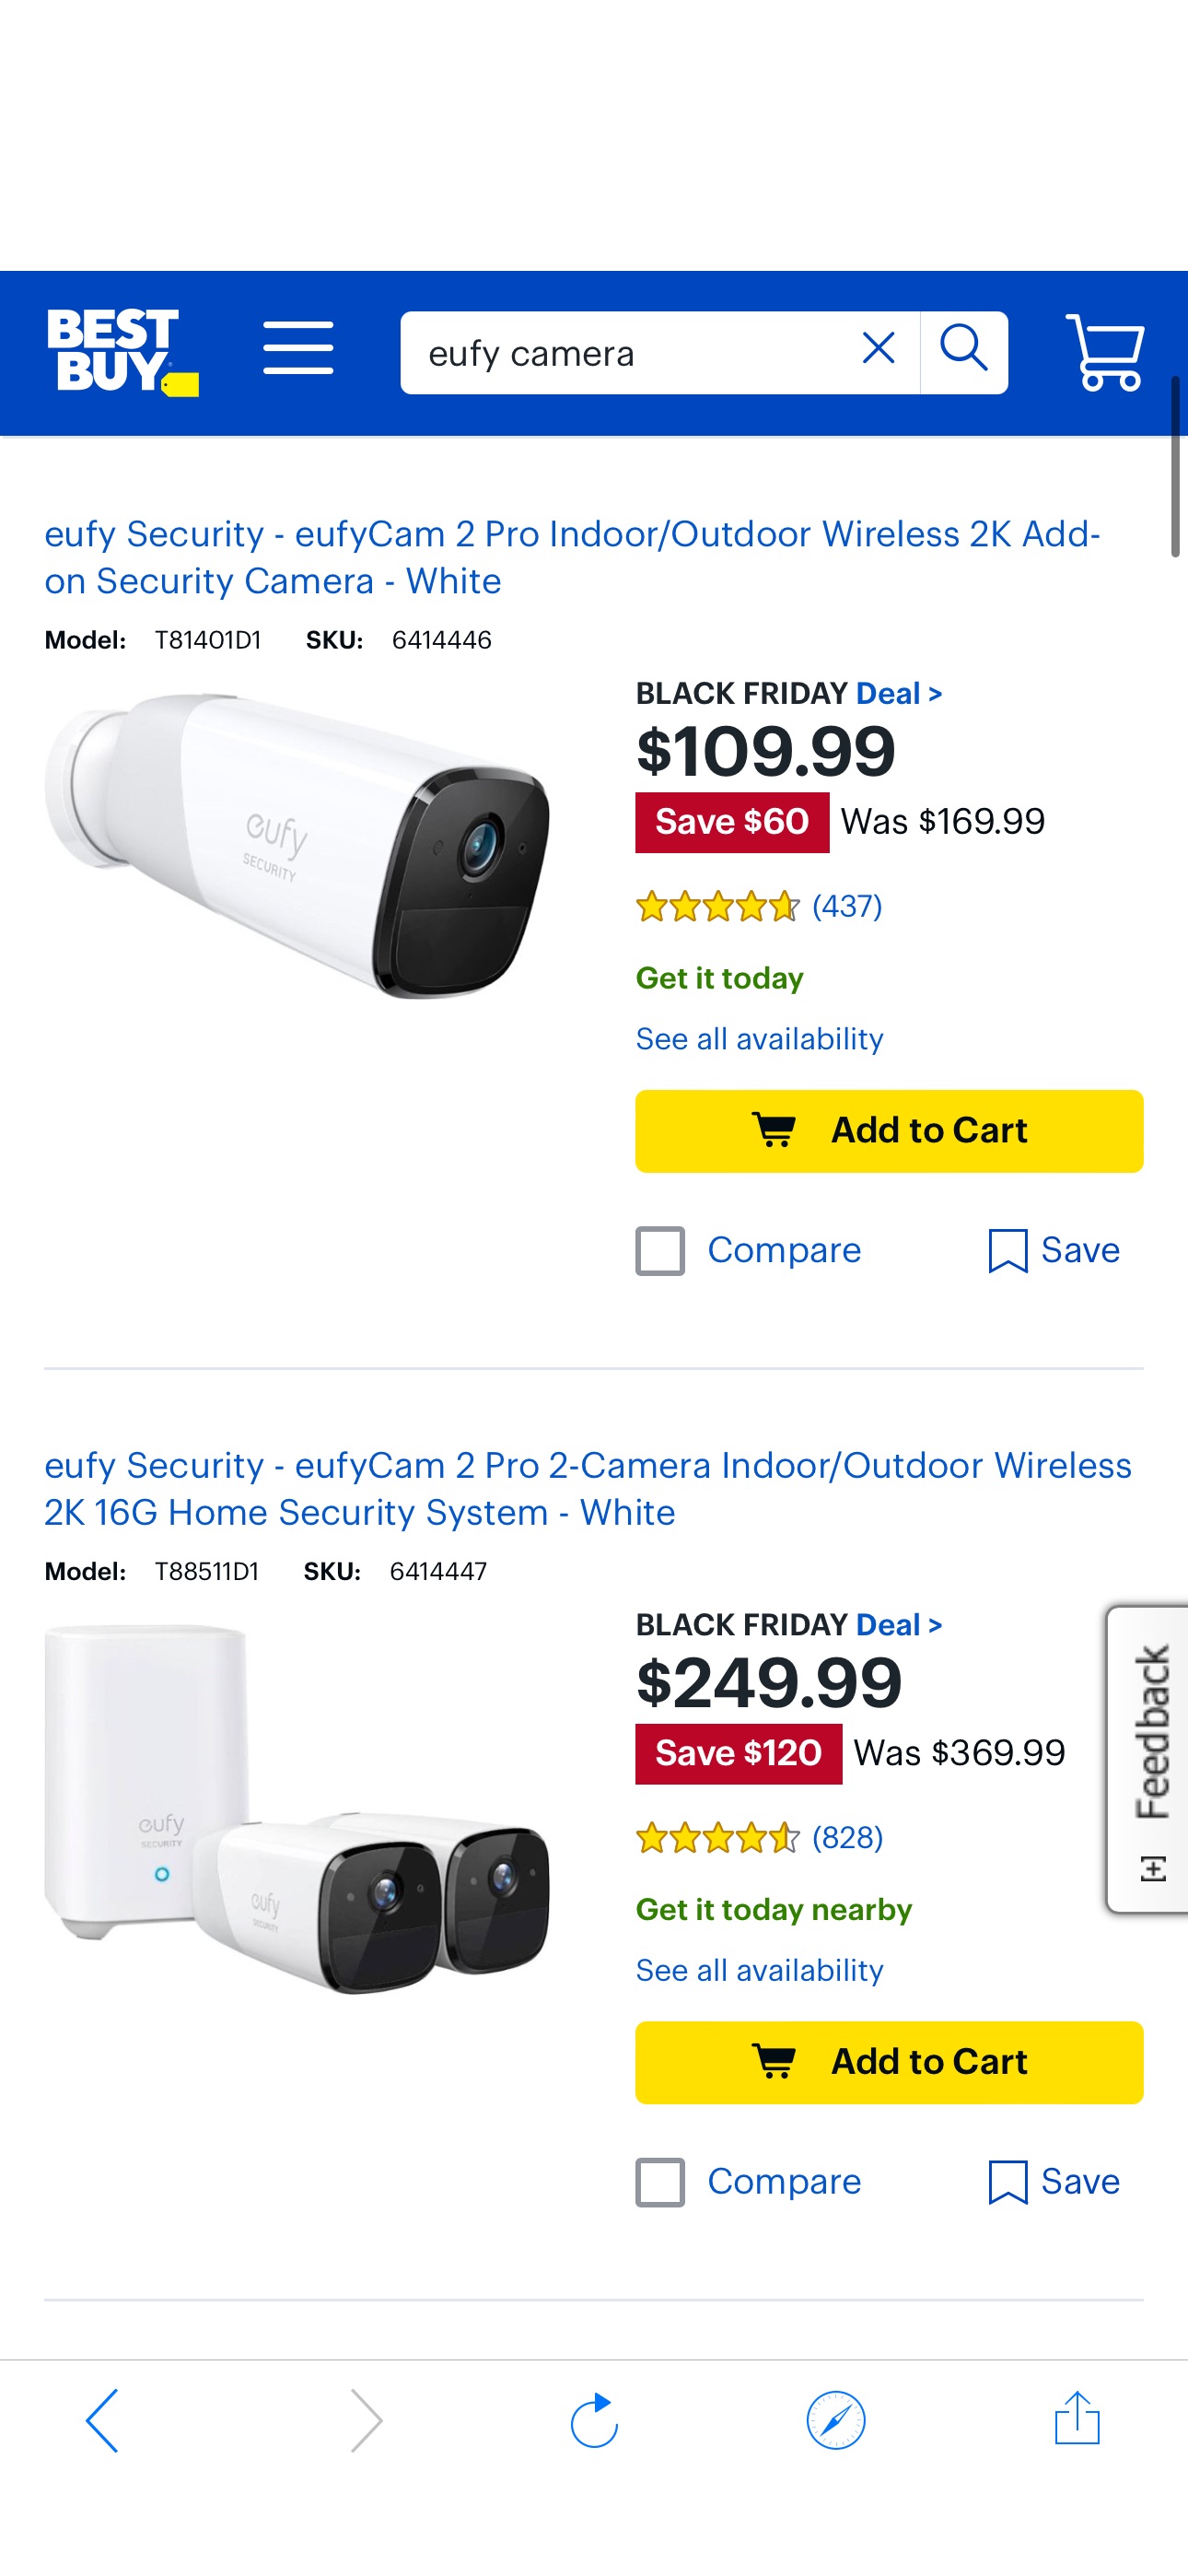 eufy camera - Best Buy